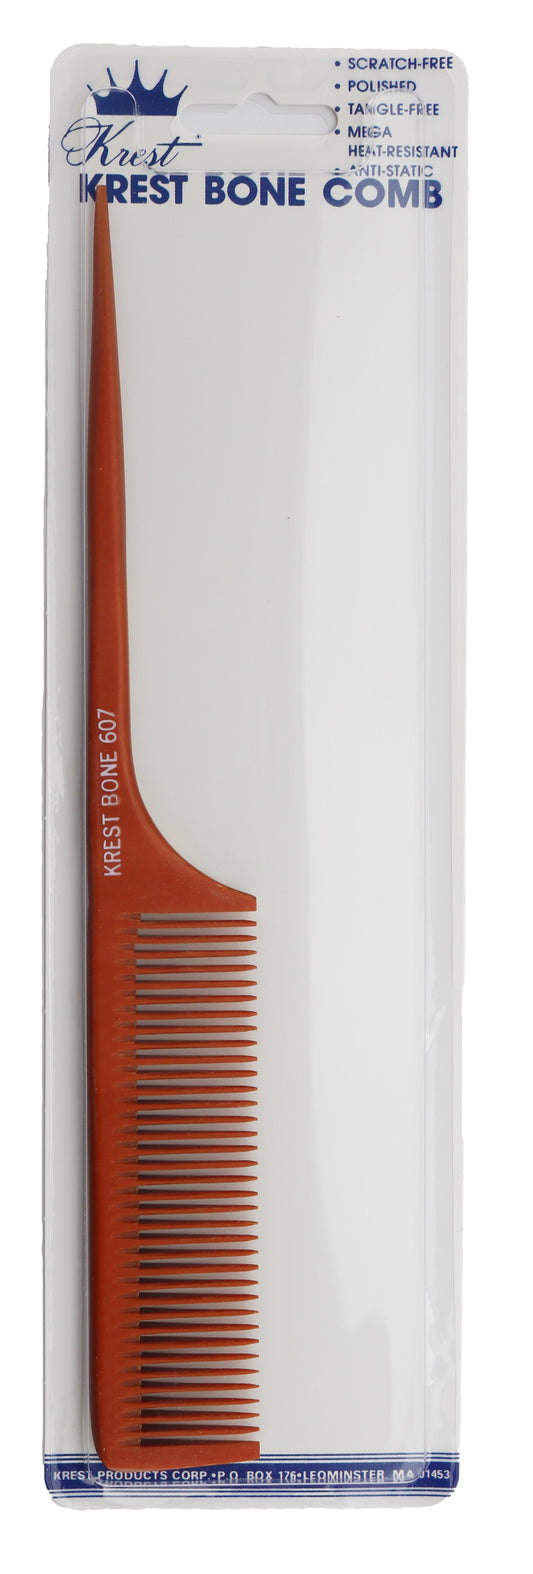 Krest Bone 9 In Medium-Coarse Teeth Rattail Comb Heat Resistant Comb. Styling Sectioning Anti-Static